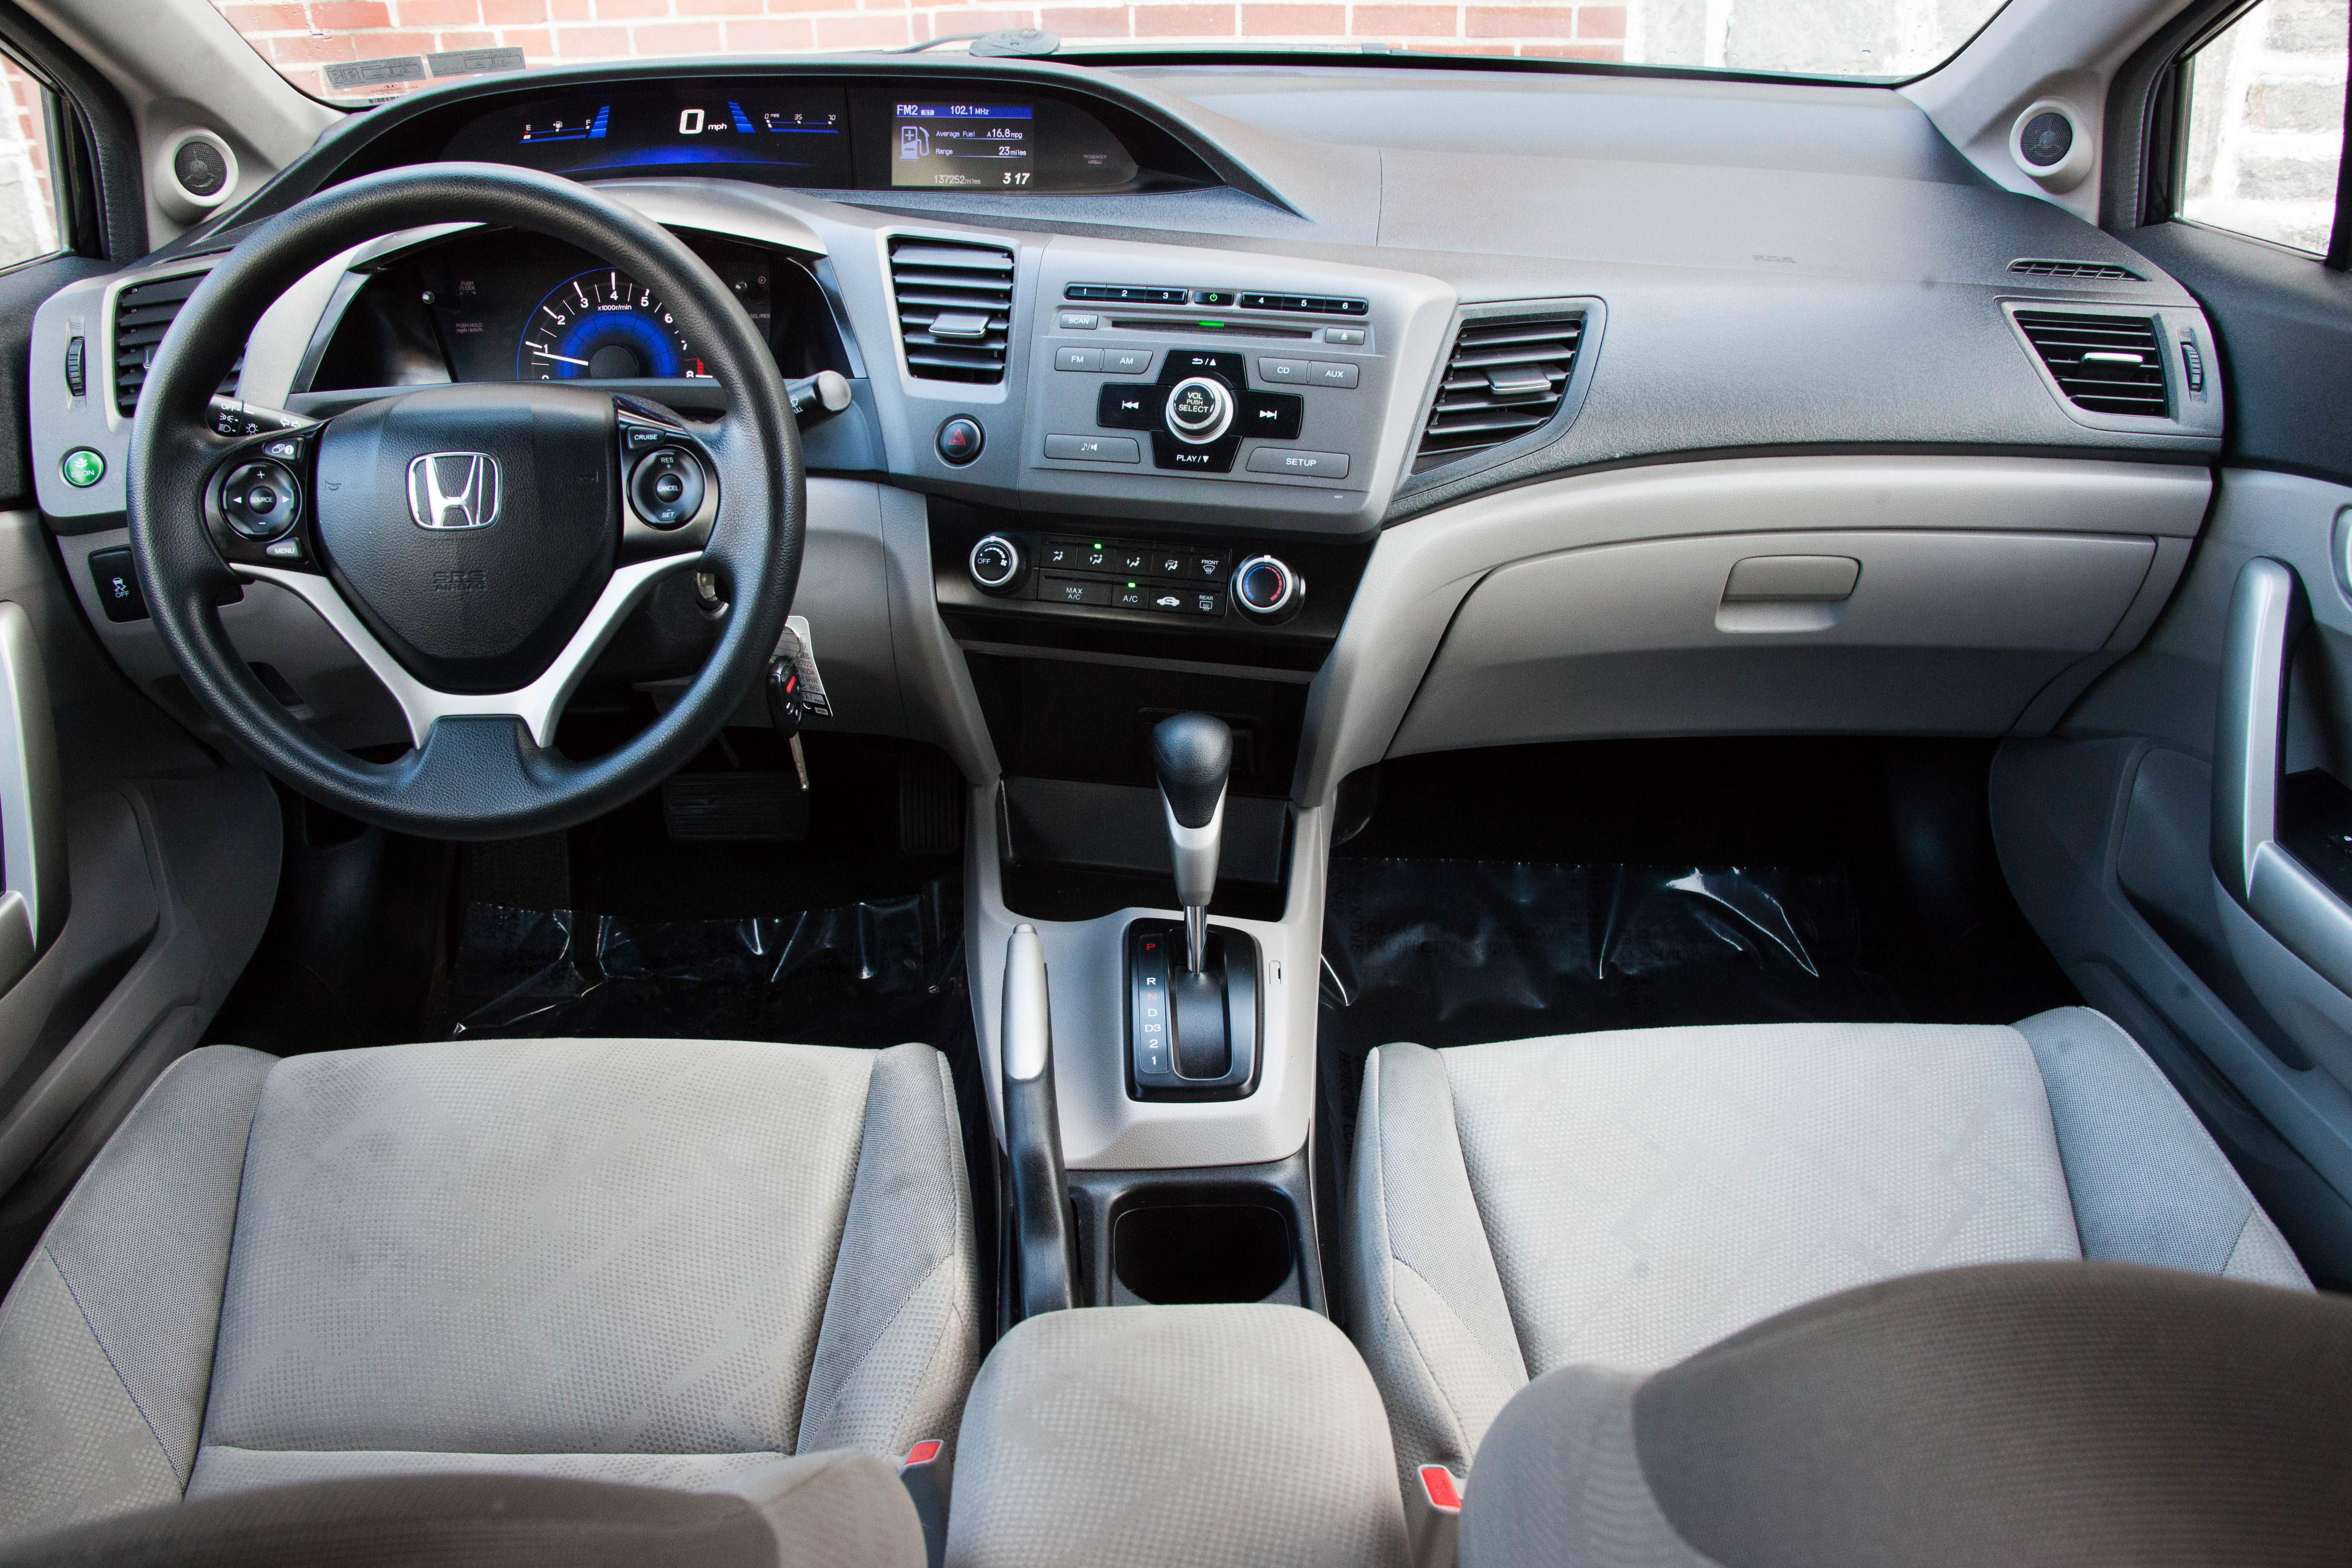 Honda Civic Interior | Honda, bmw, ford and other car